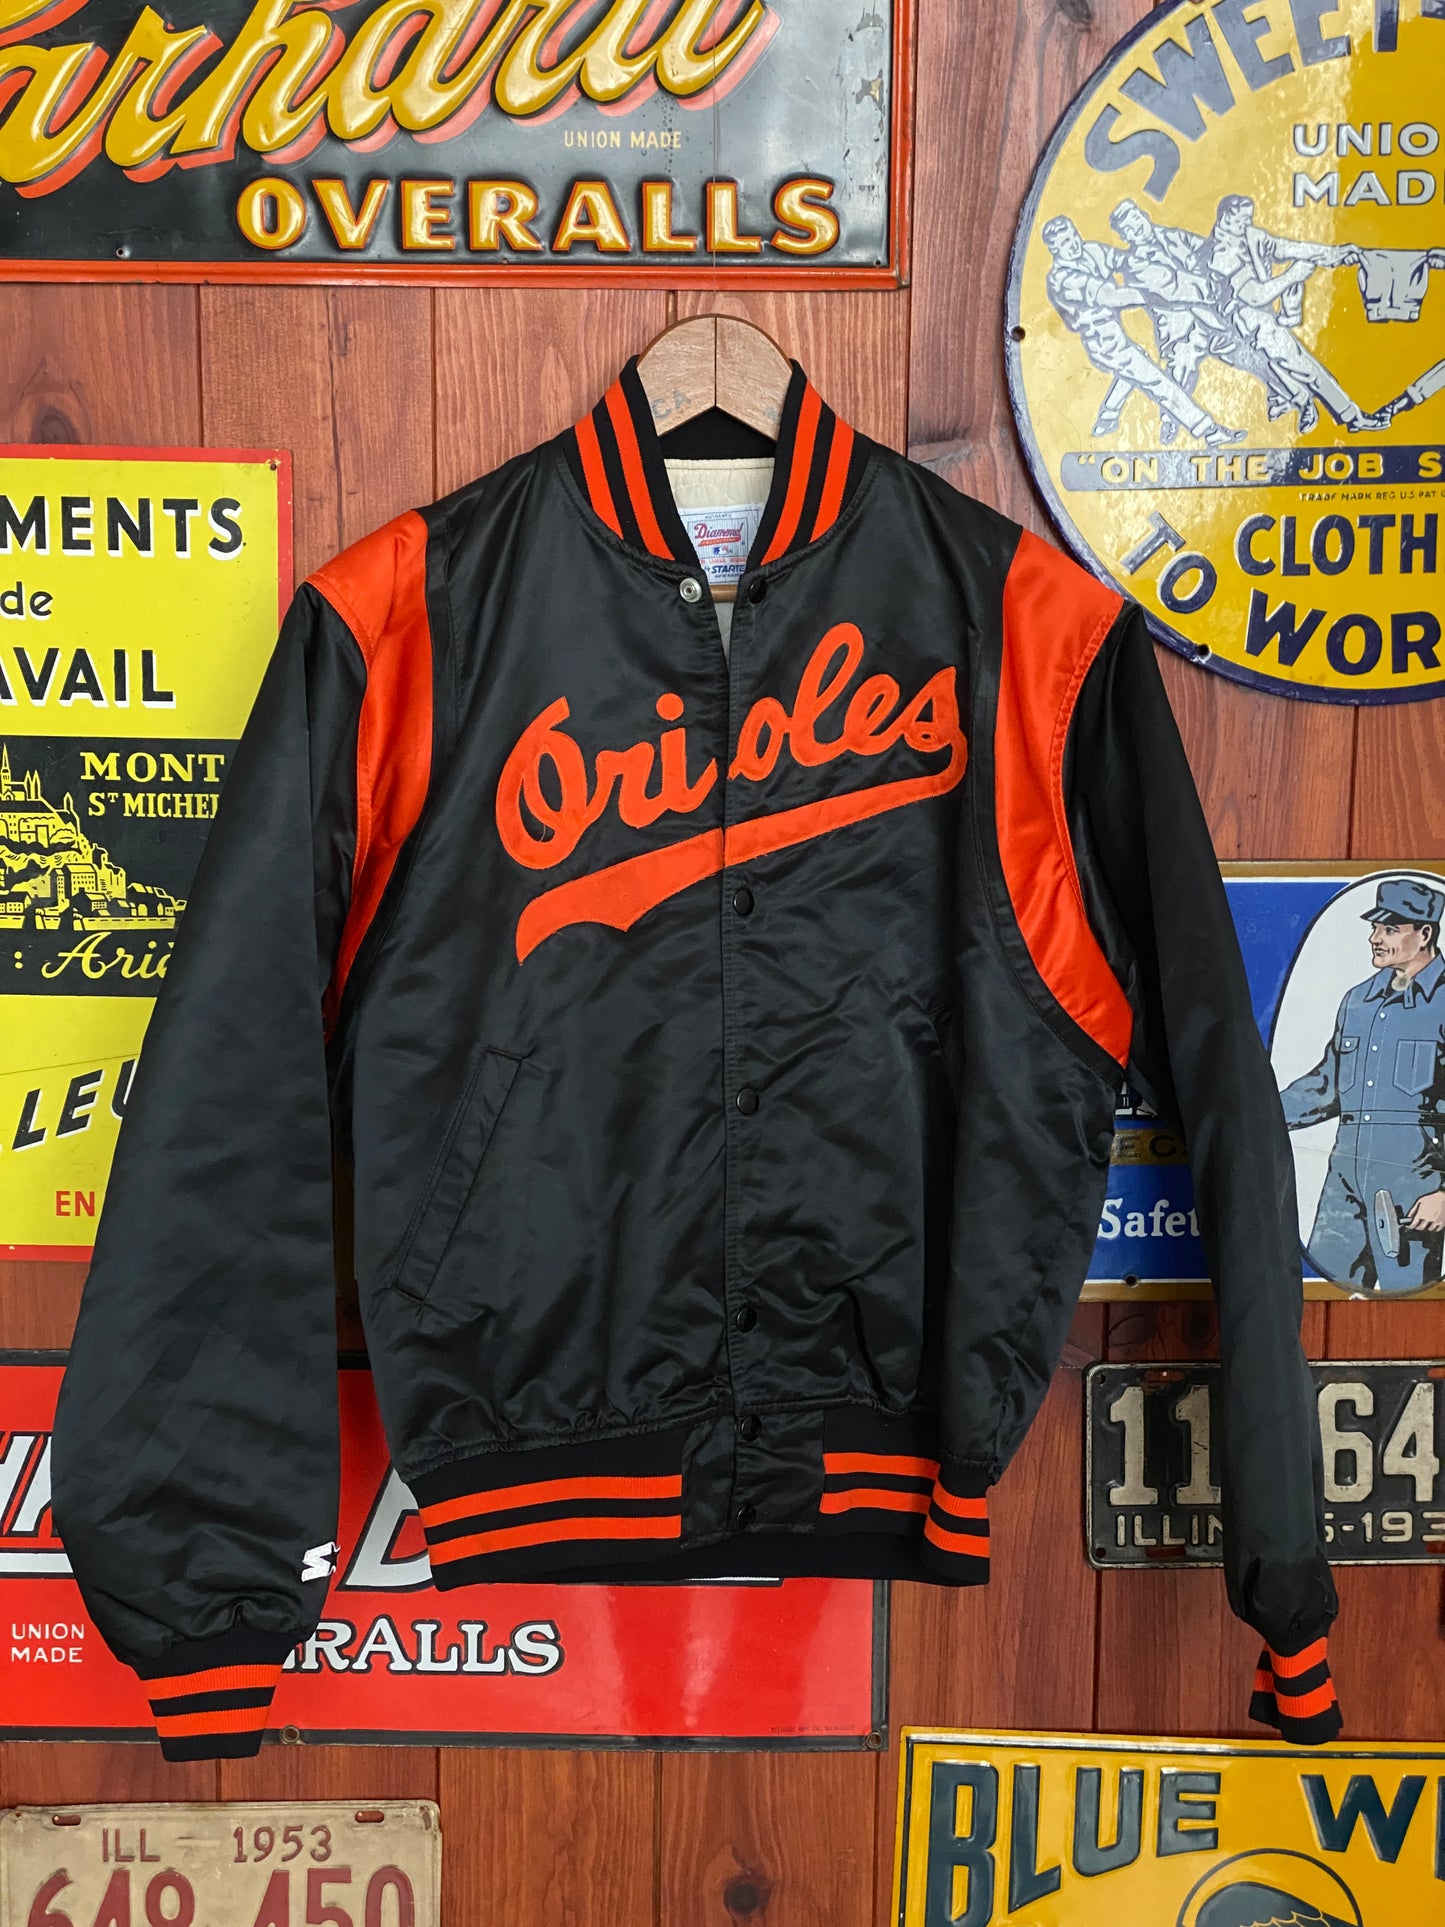 Large 80s Vintage Orioles Starter Jacket: Retro Apparel Made in USA